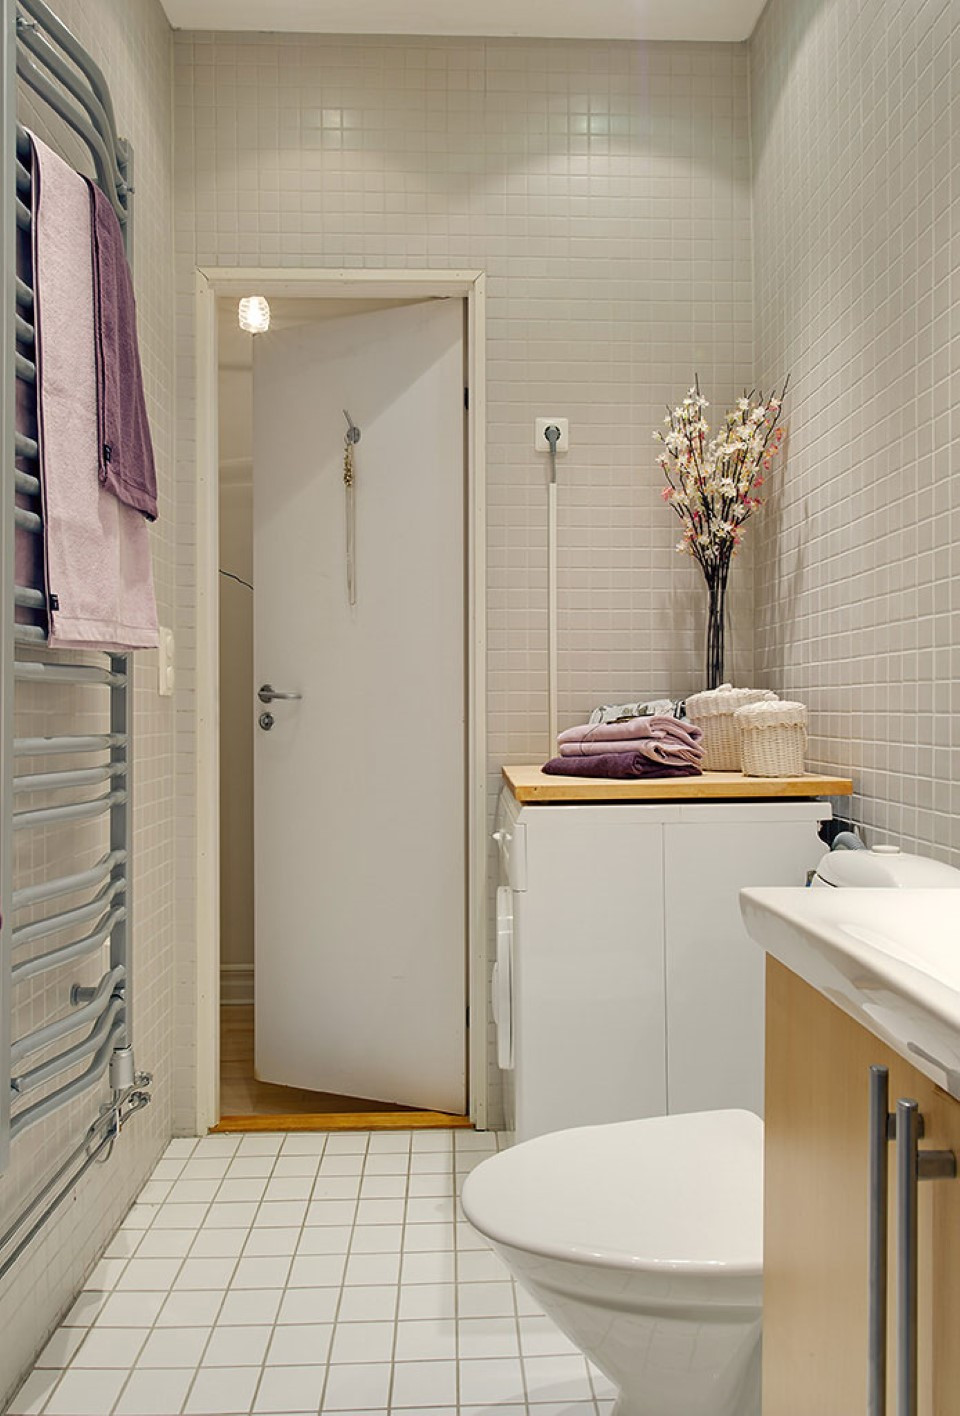 Apartment Bathroom Decorating Ideas
 Modern Minimalist Apartment Bathroom Interior Design with